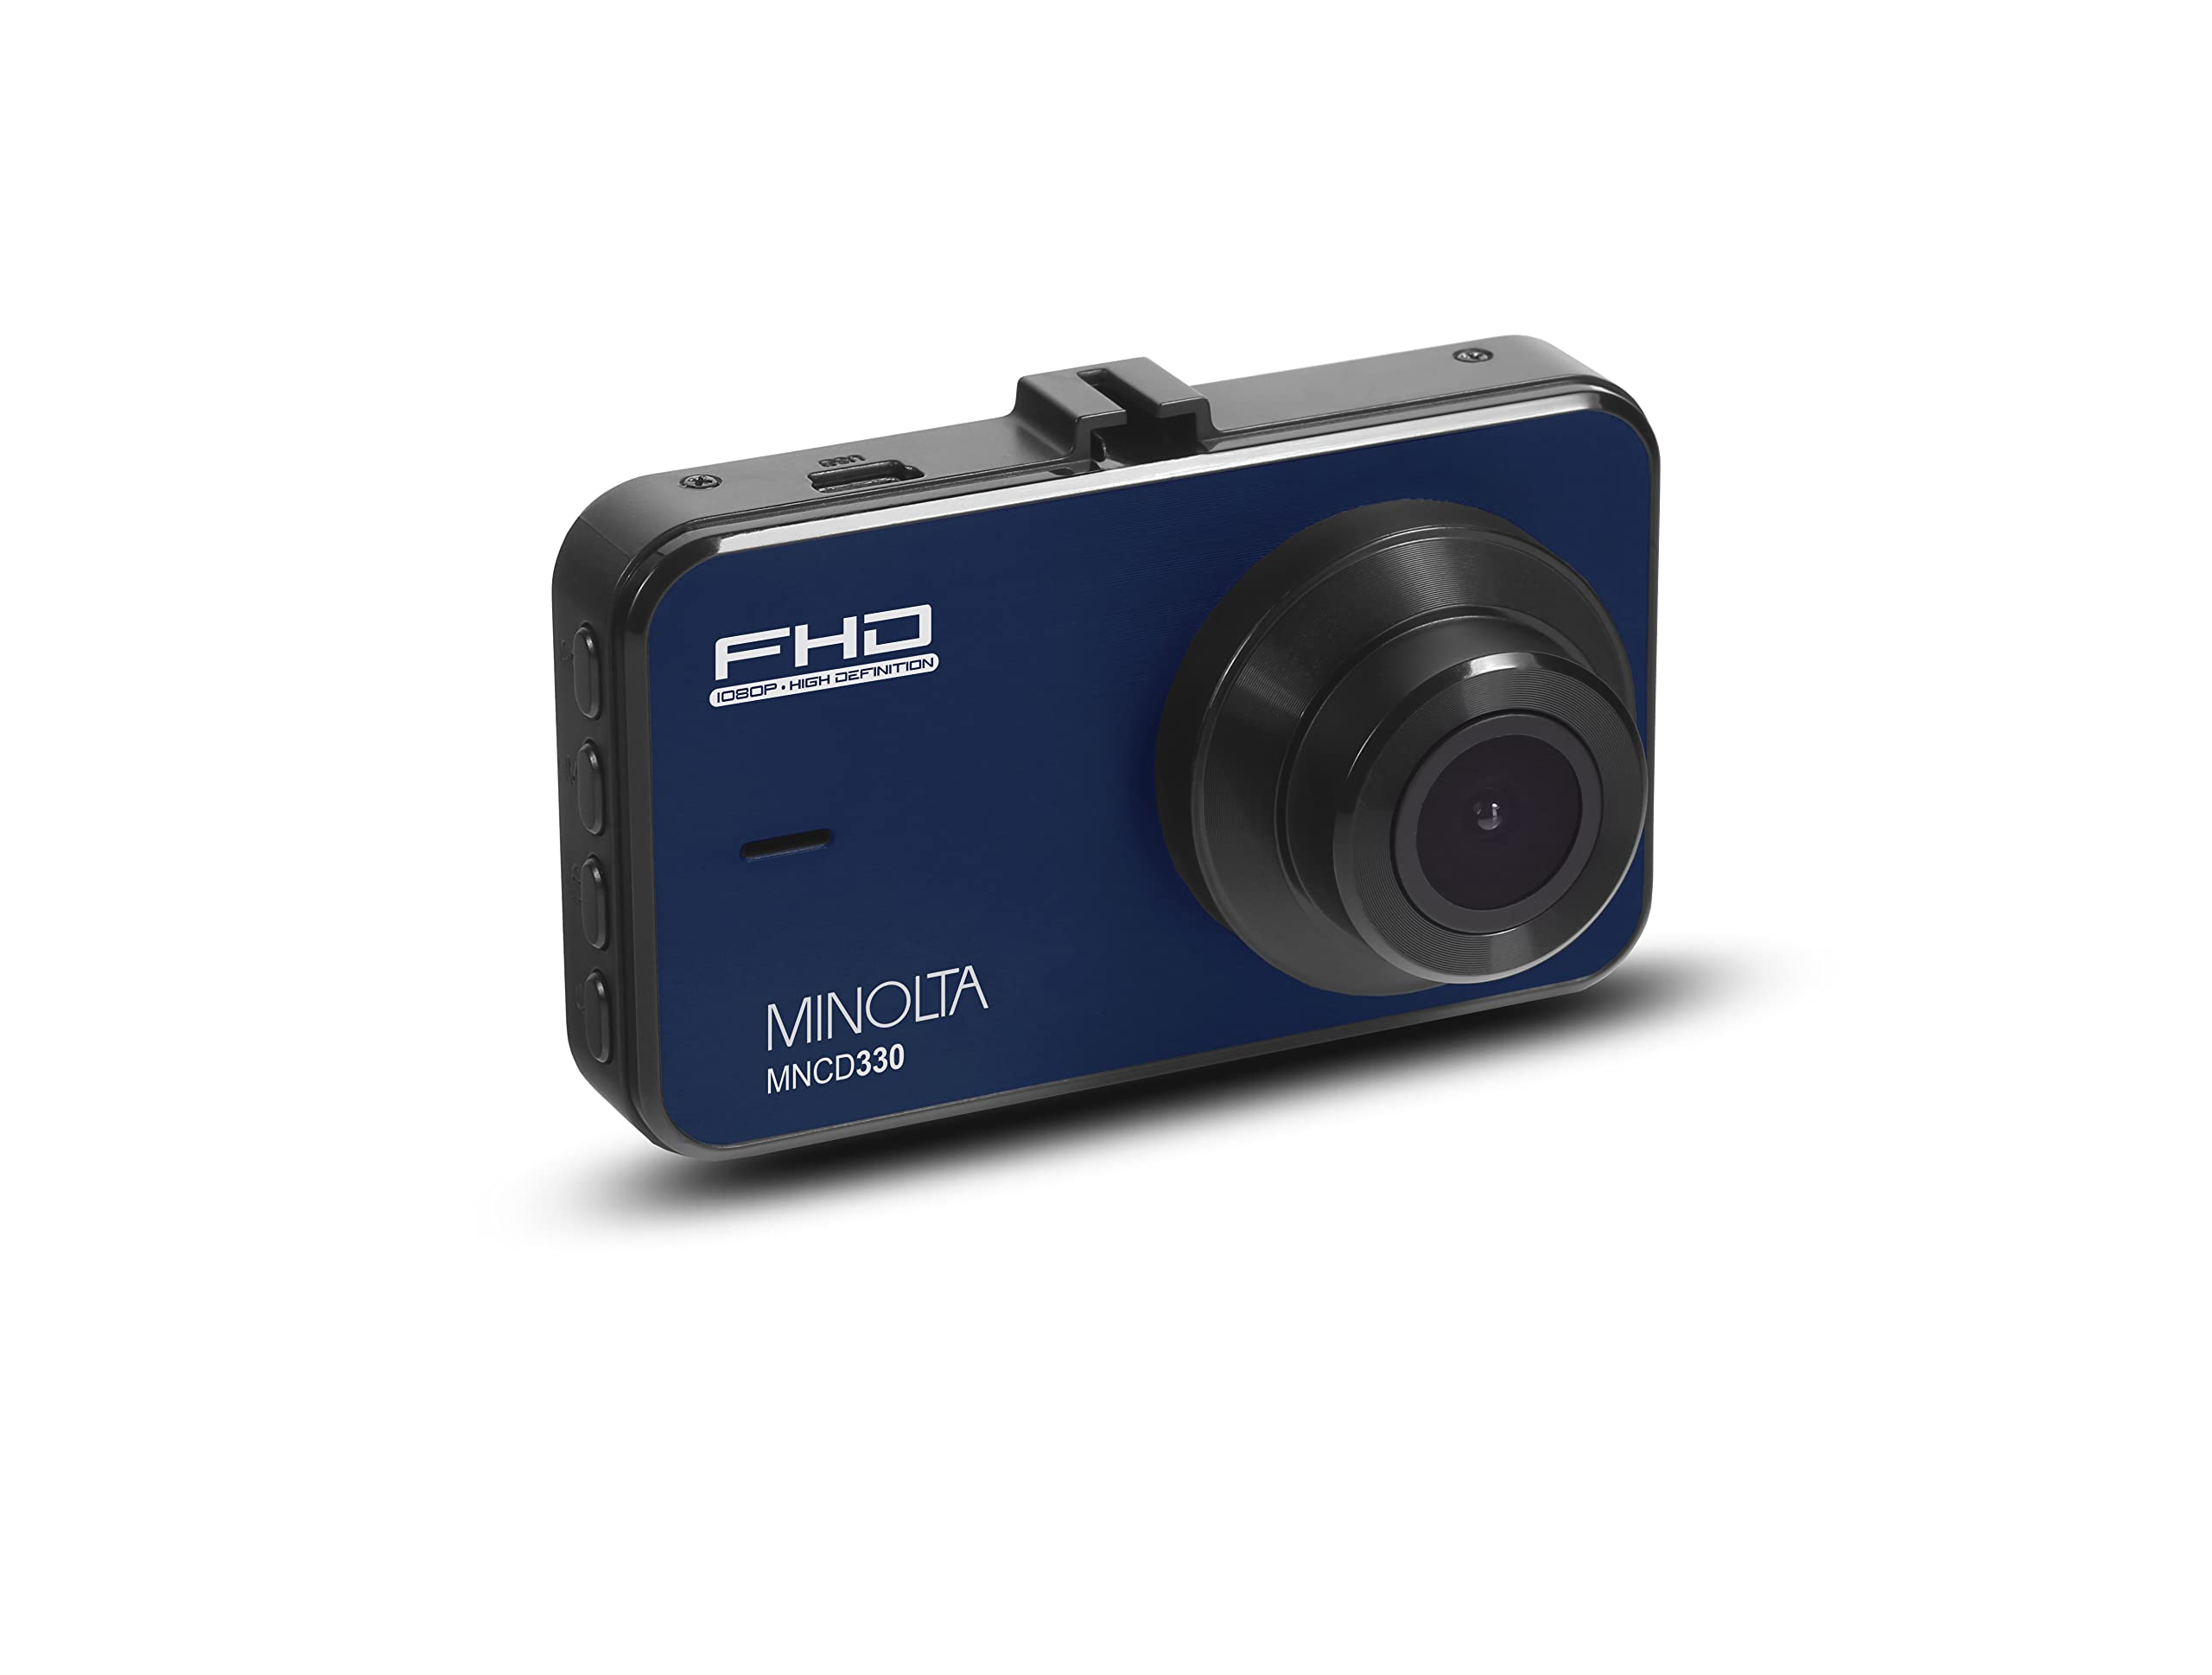 Minolta MNCD330 1080p Car Camcorder w/3.0